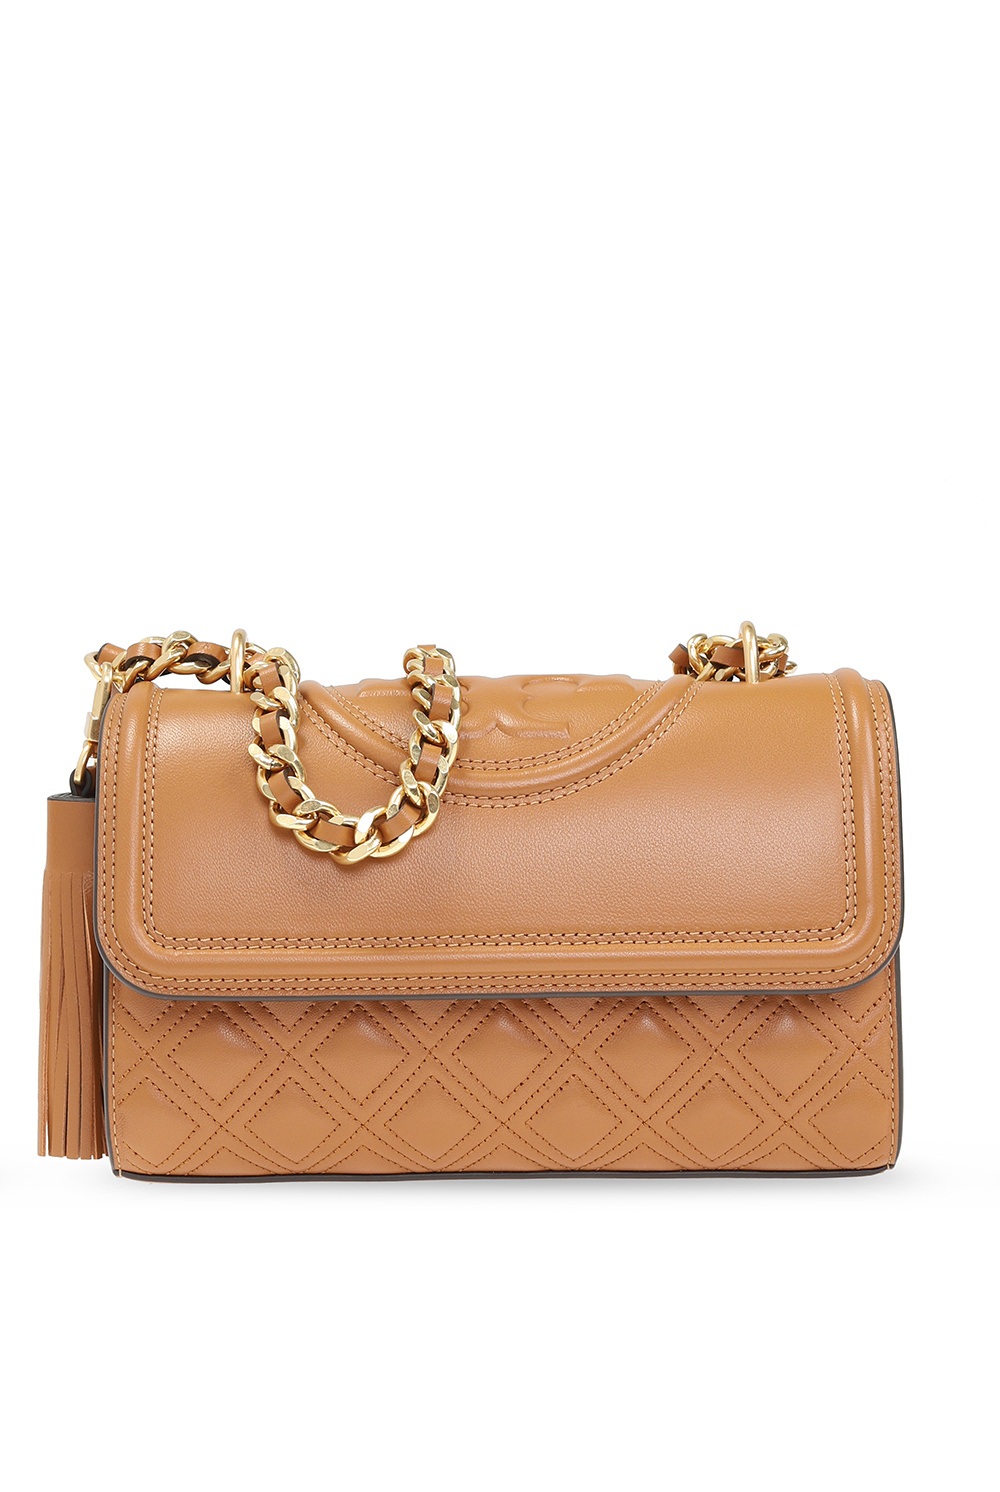 Tory Burch Fleming Small Quilted Nylon Shoulder Bag 55143-001 192485193473  - Handbags - Jomashop